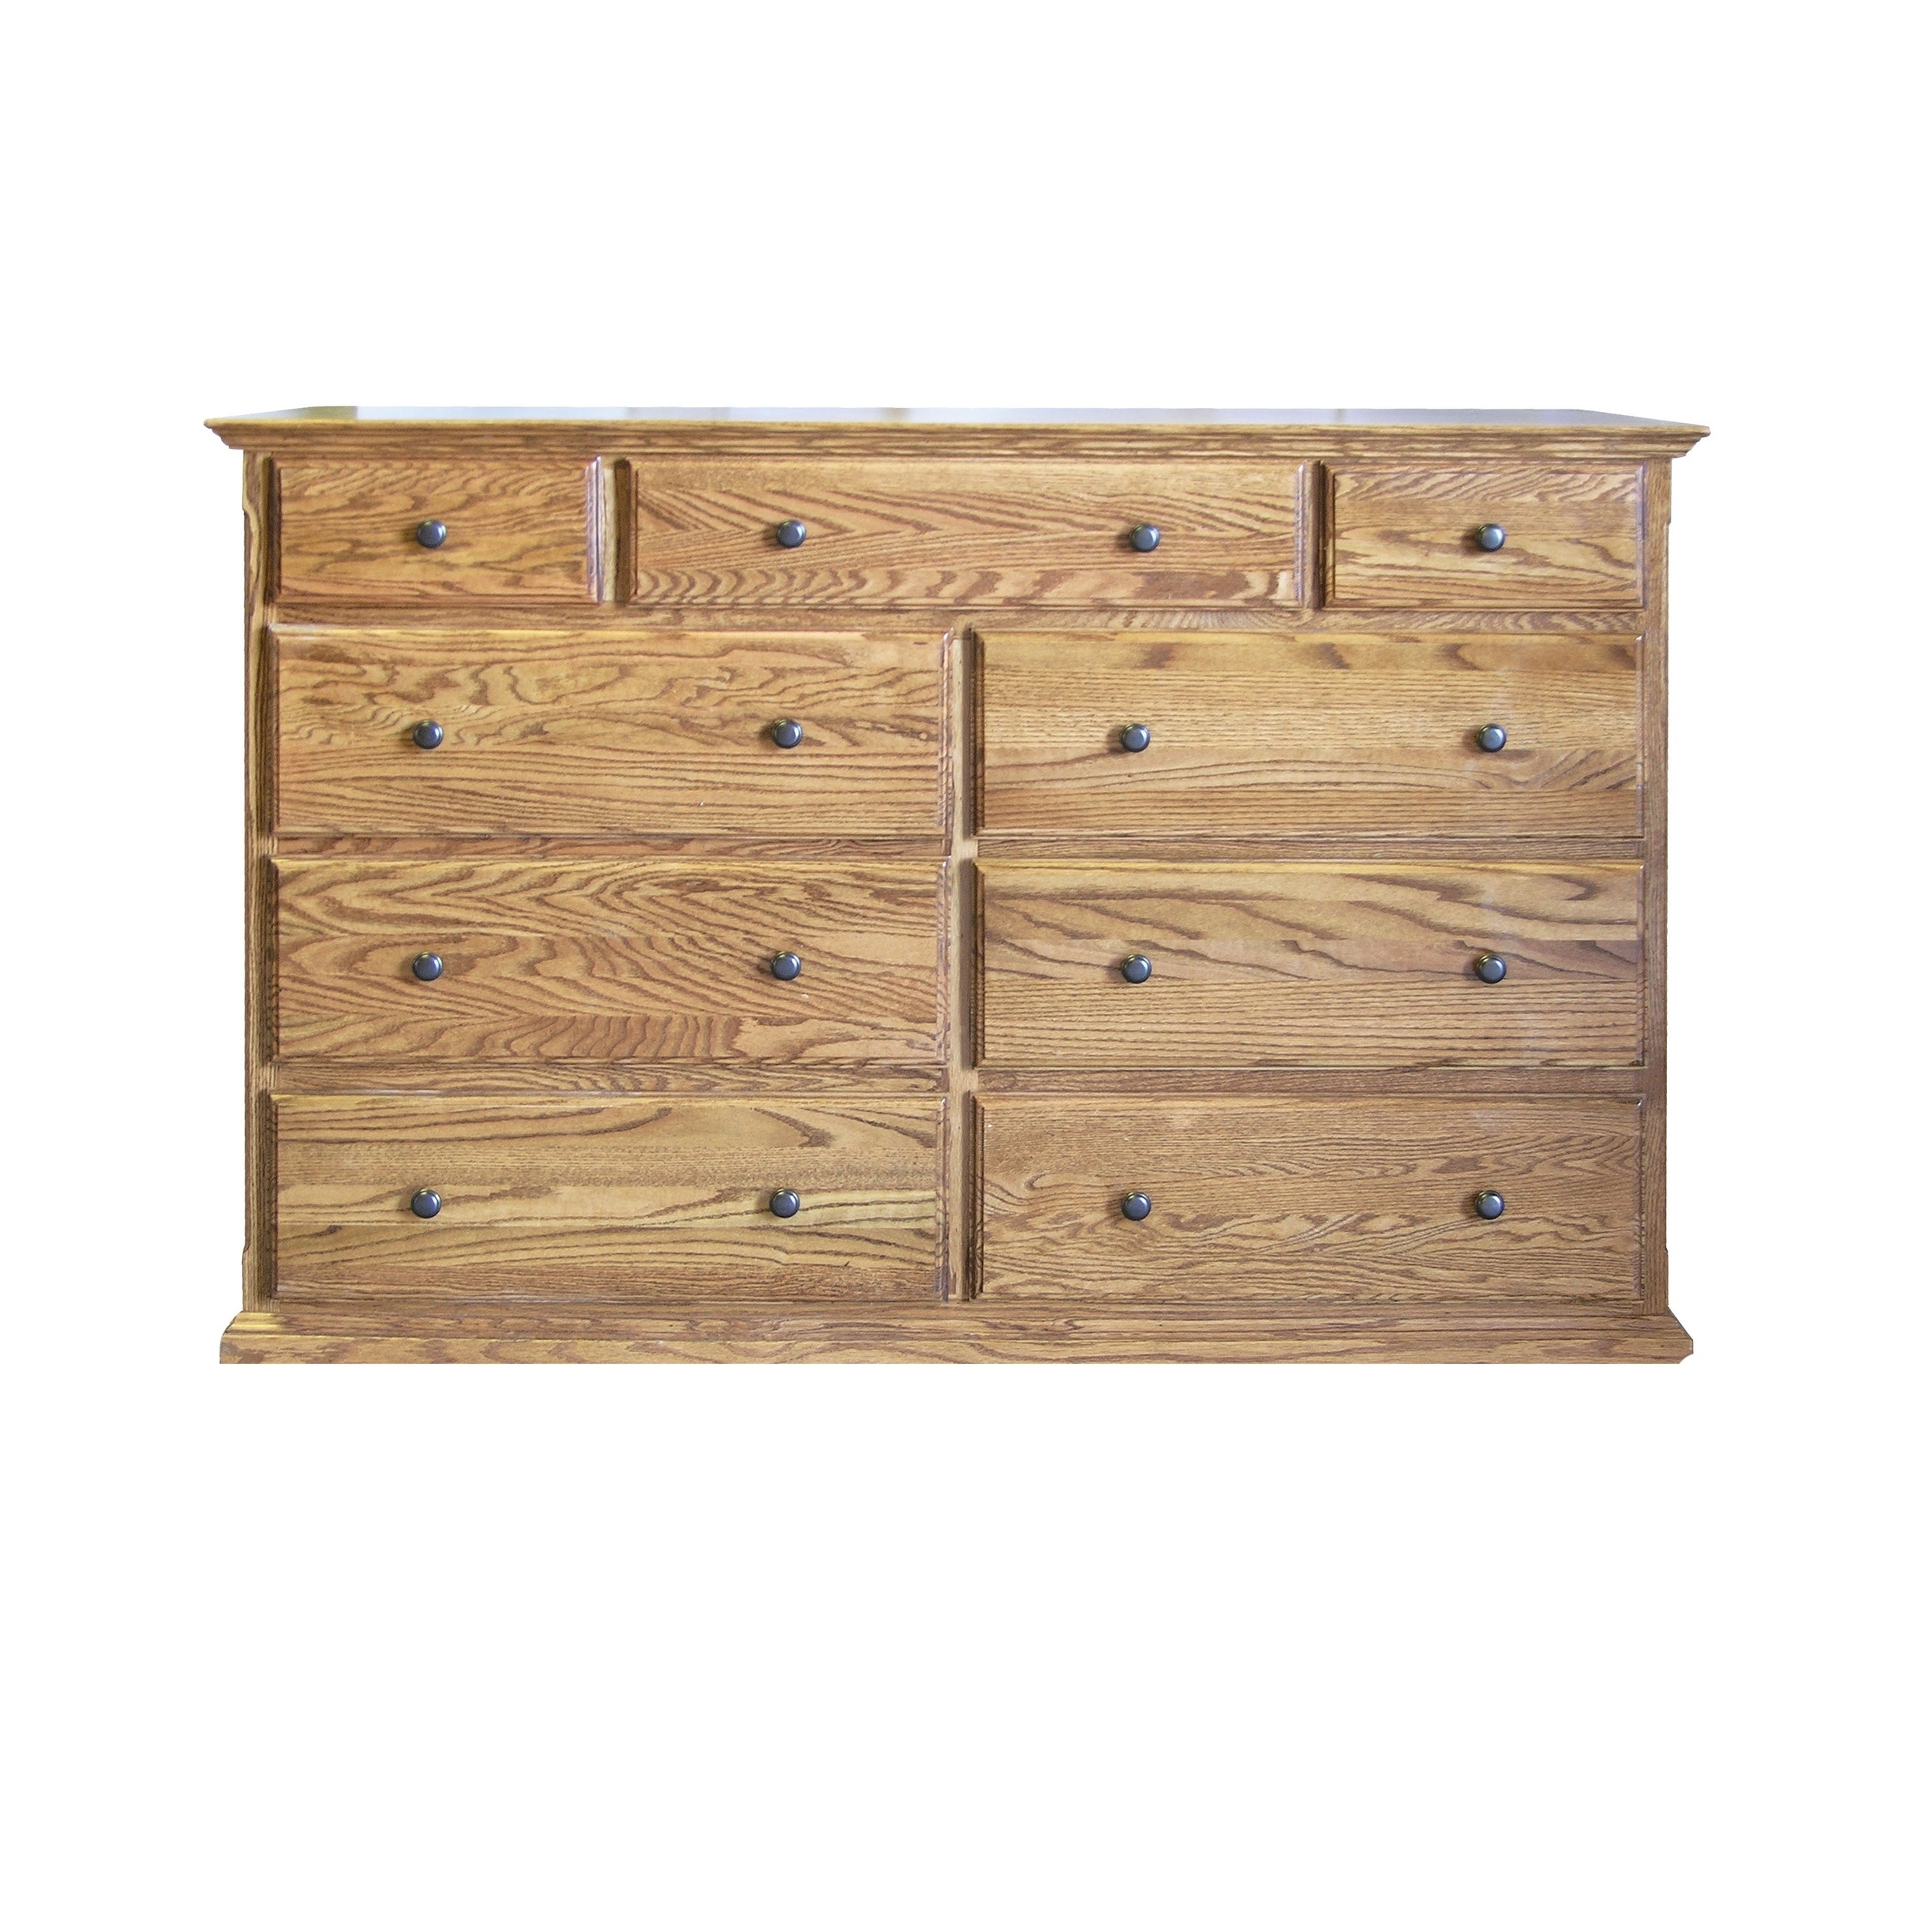 Traditional Twelve Drawer Tall Dresser 60W x 40H x 18D - Bed Bath & Beyond  - 26040900